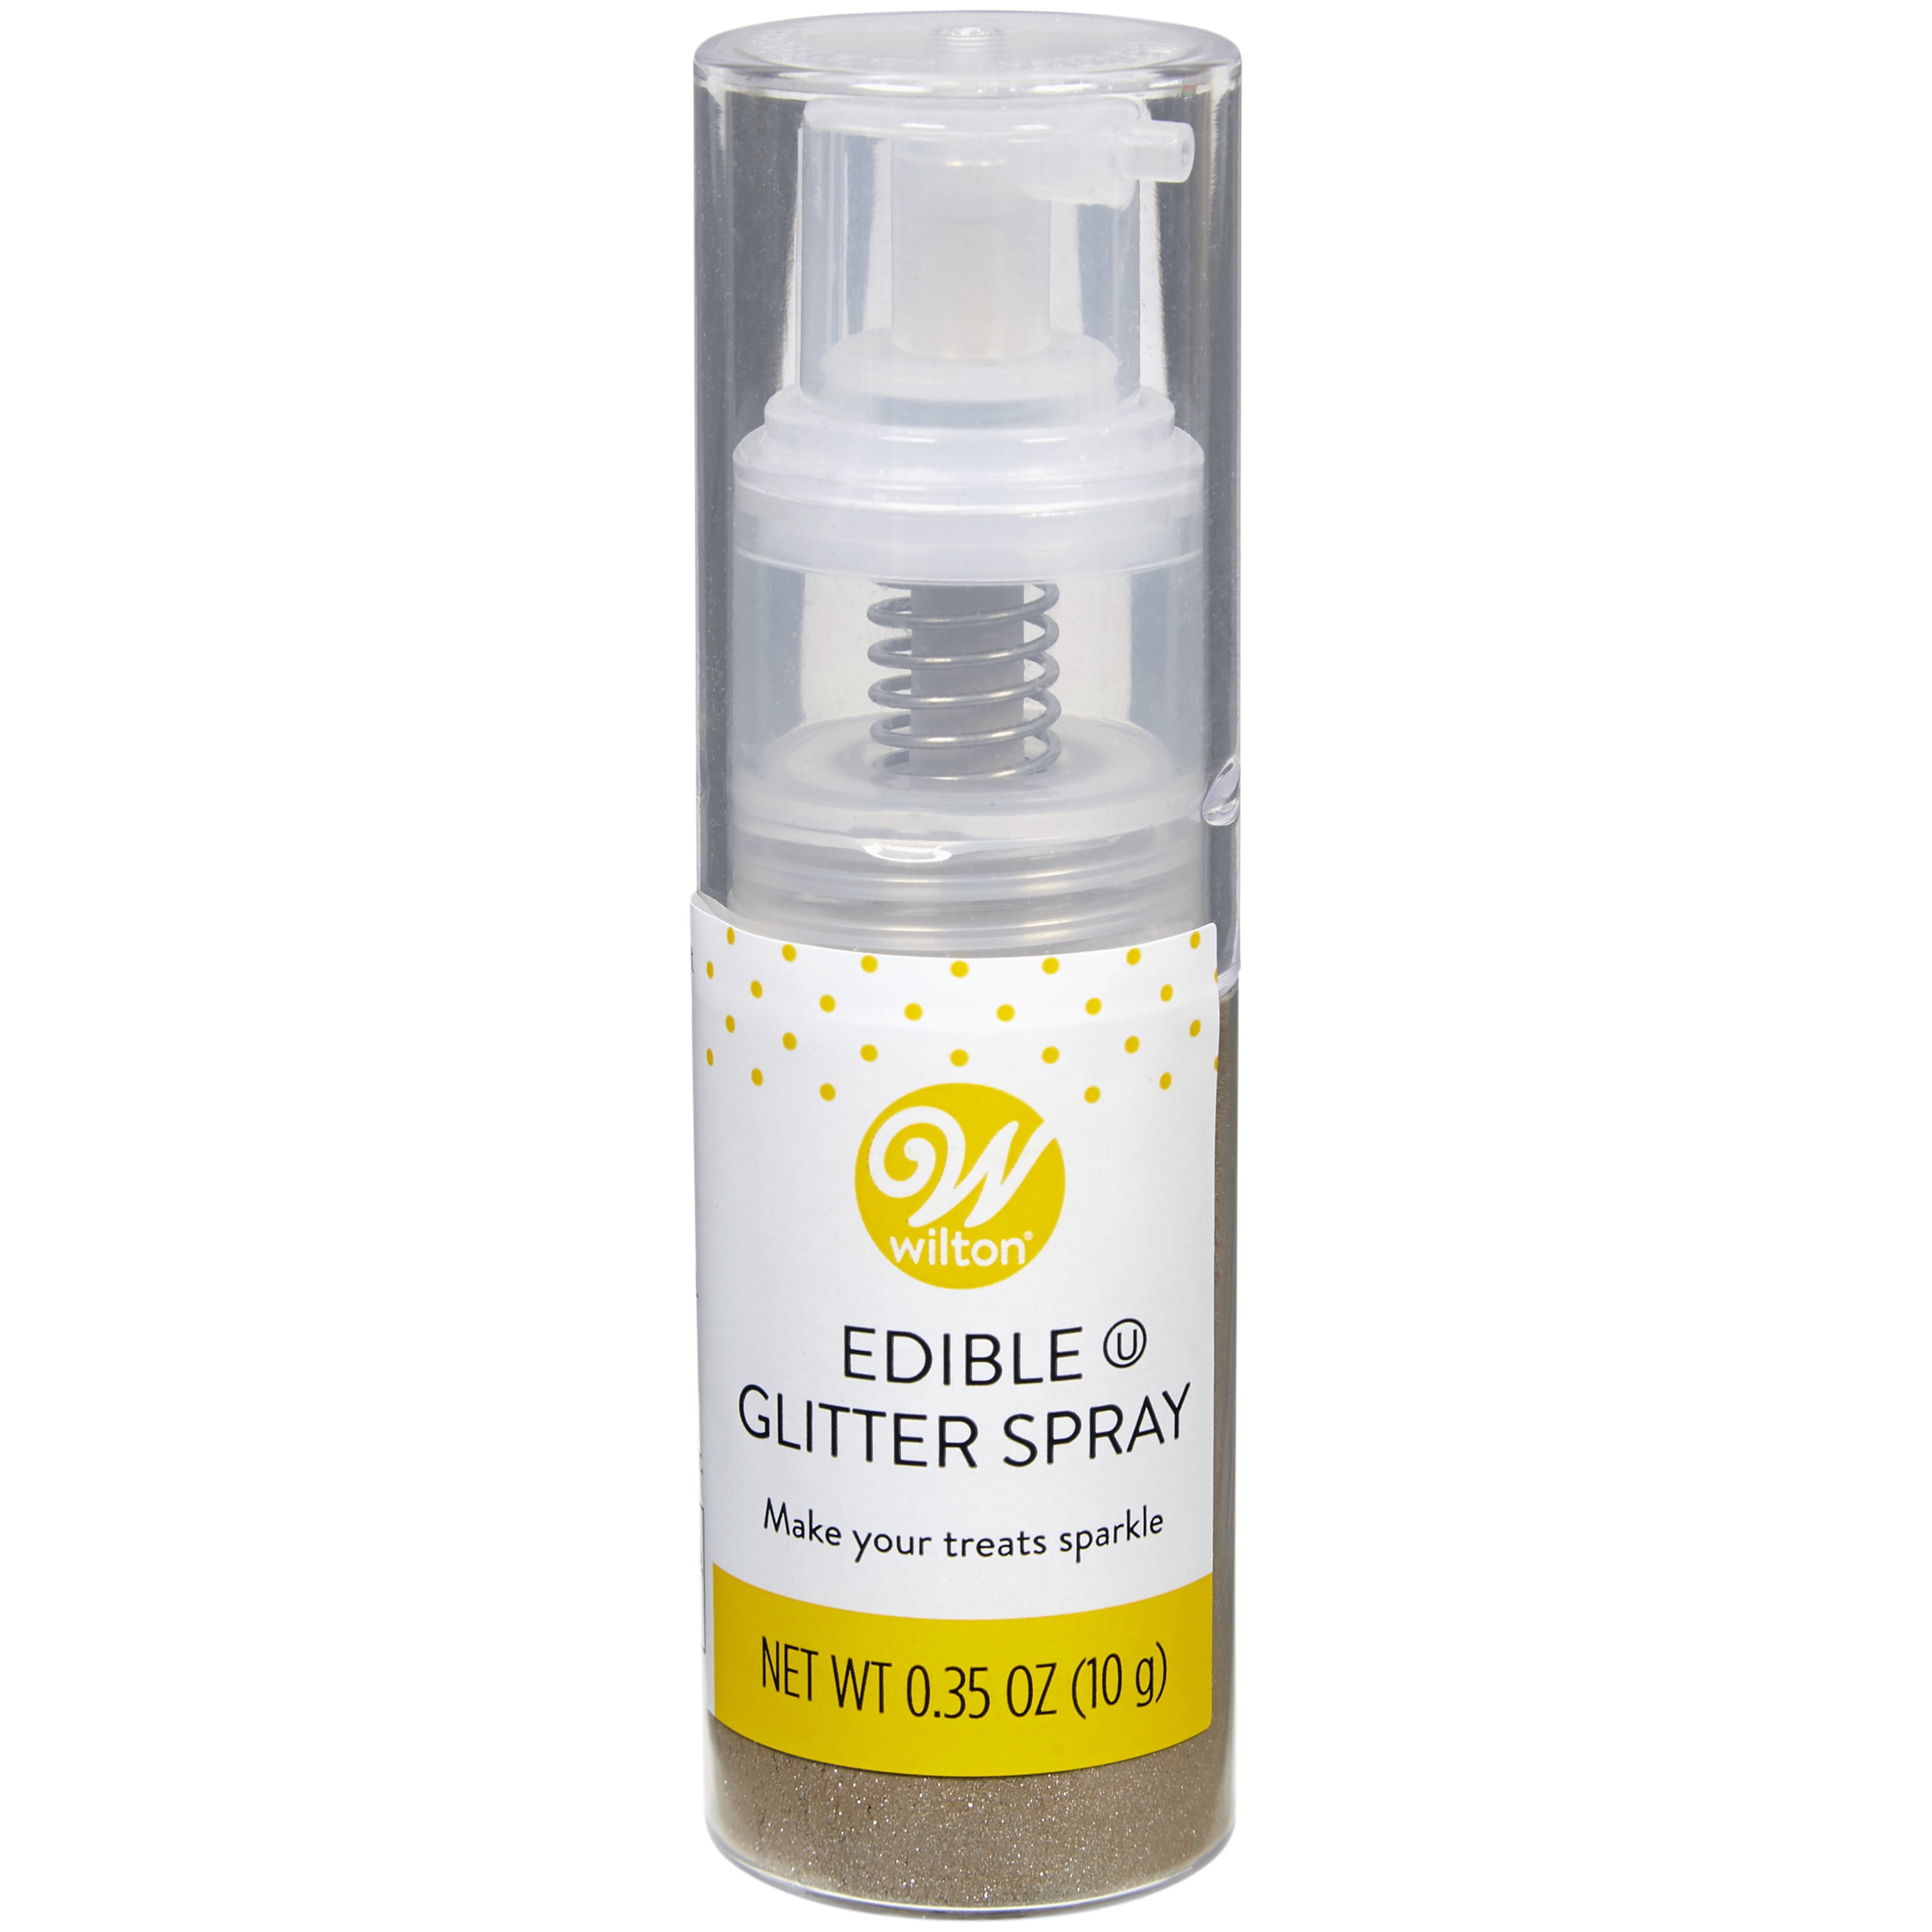 Buy Rose Gold Edible Glitter Mini Spray Pump for Drinks, $$11.98 USD